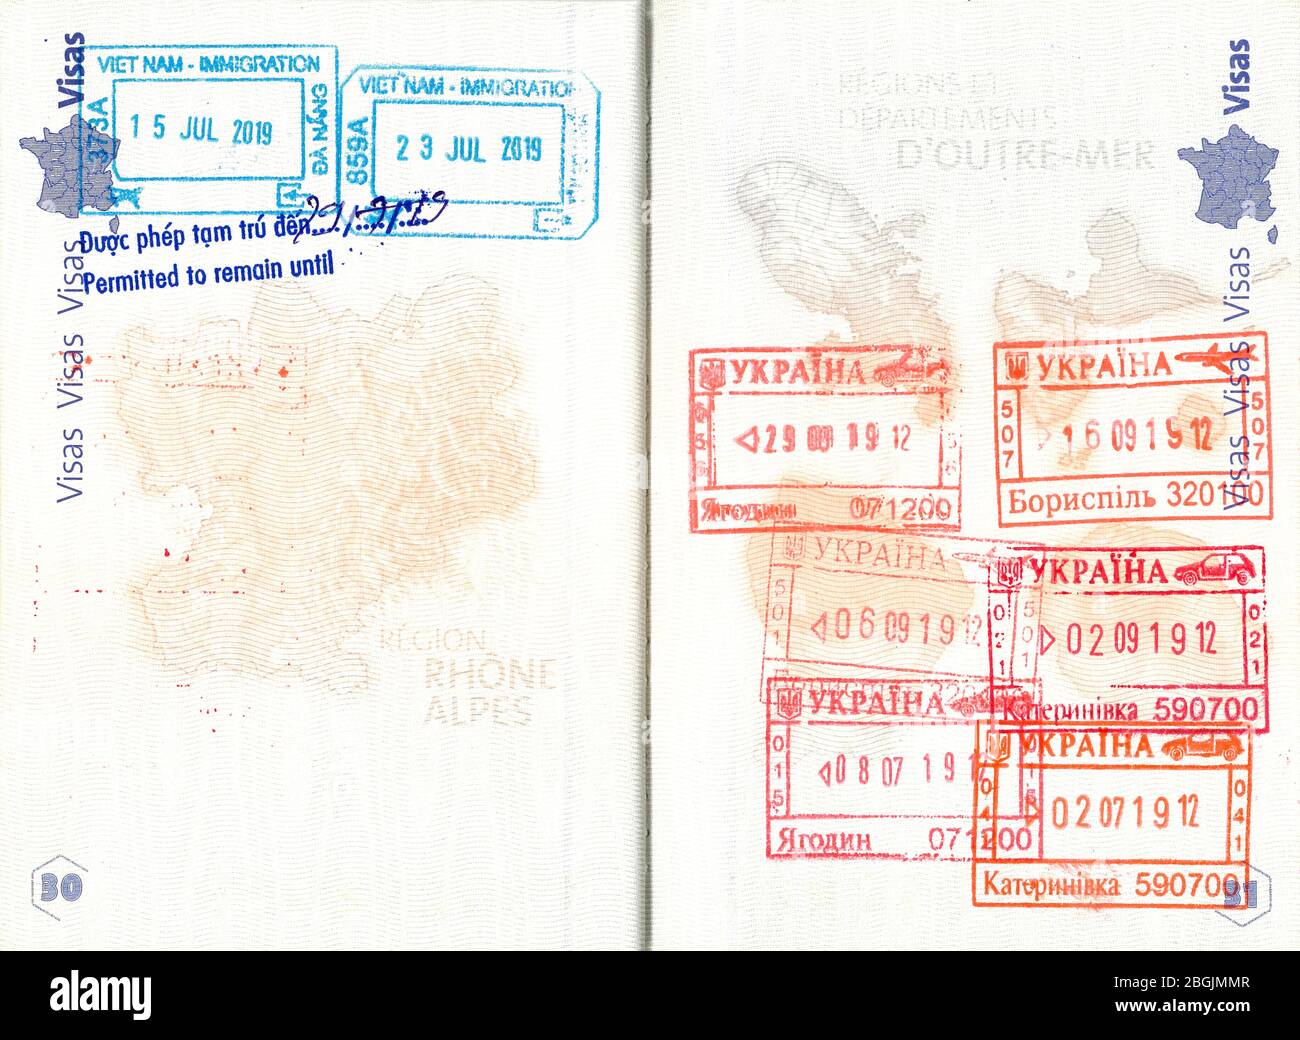 Stamps of Vietnam and Ukraine in French passport Stock Photo